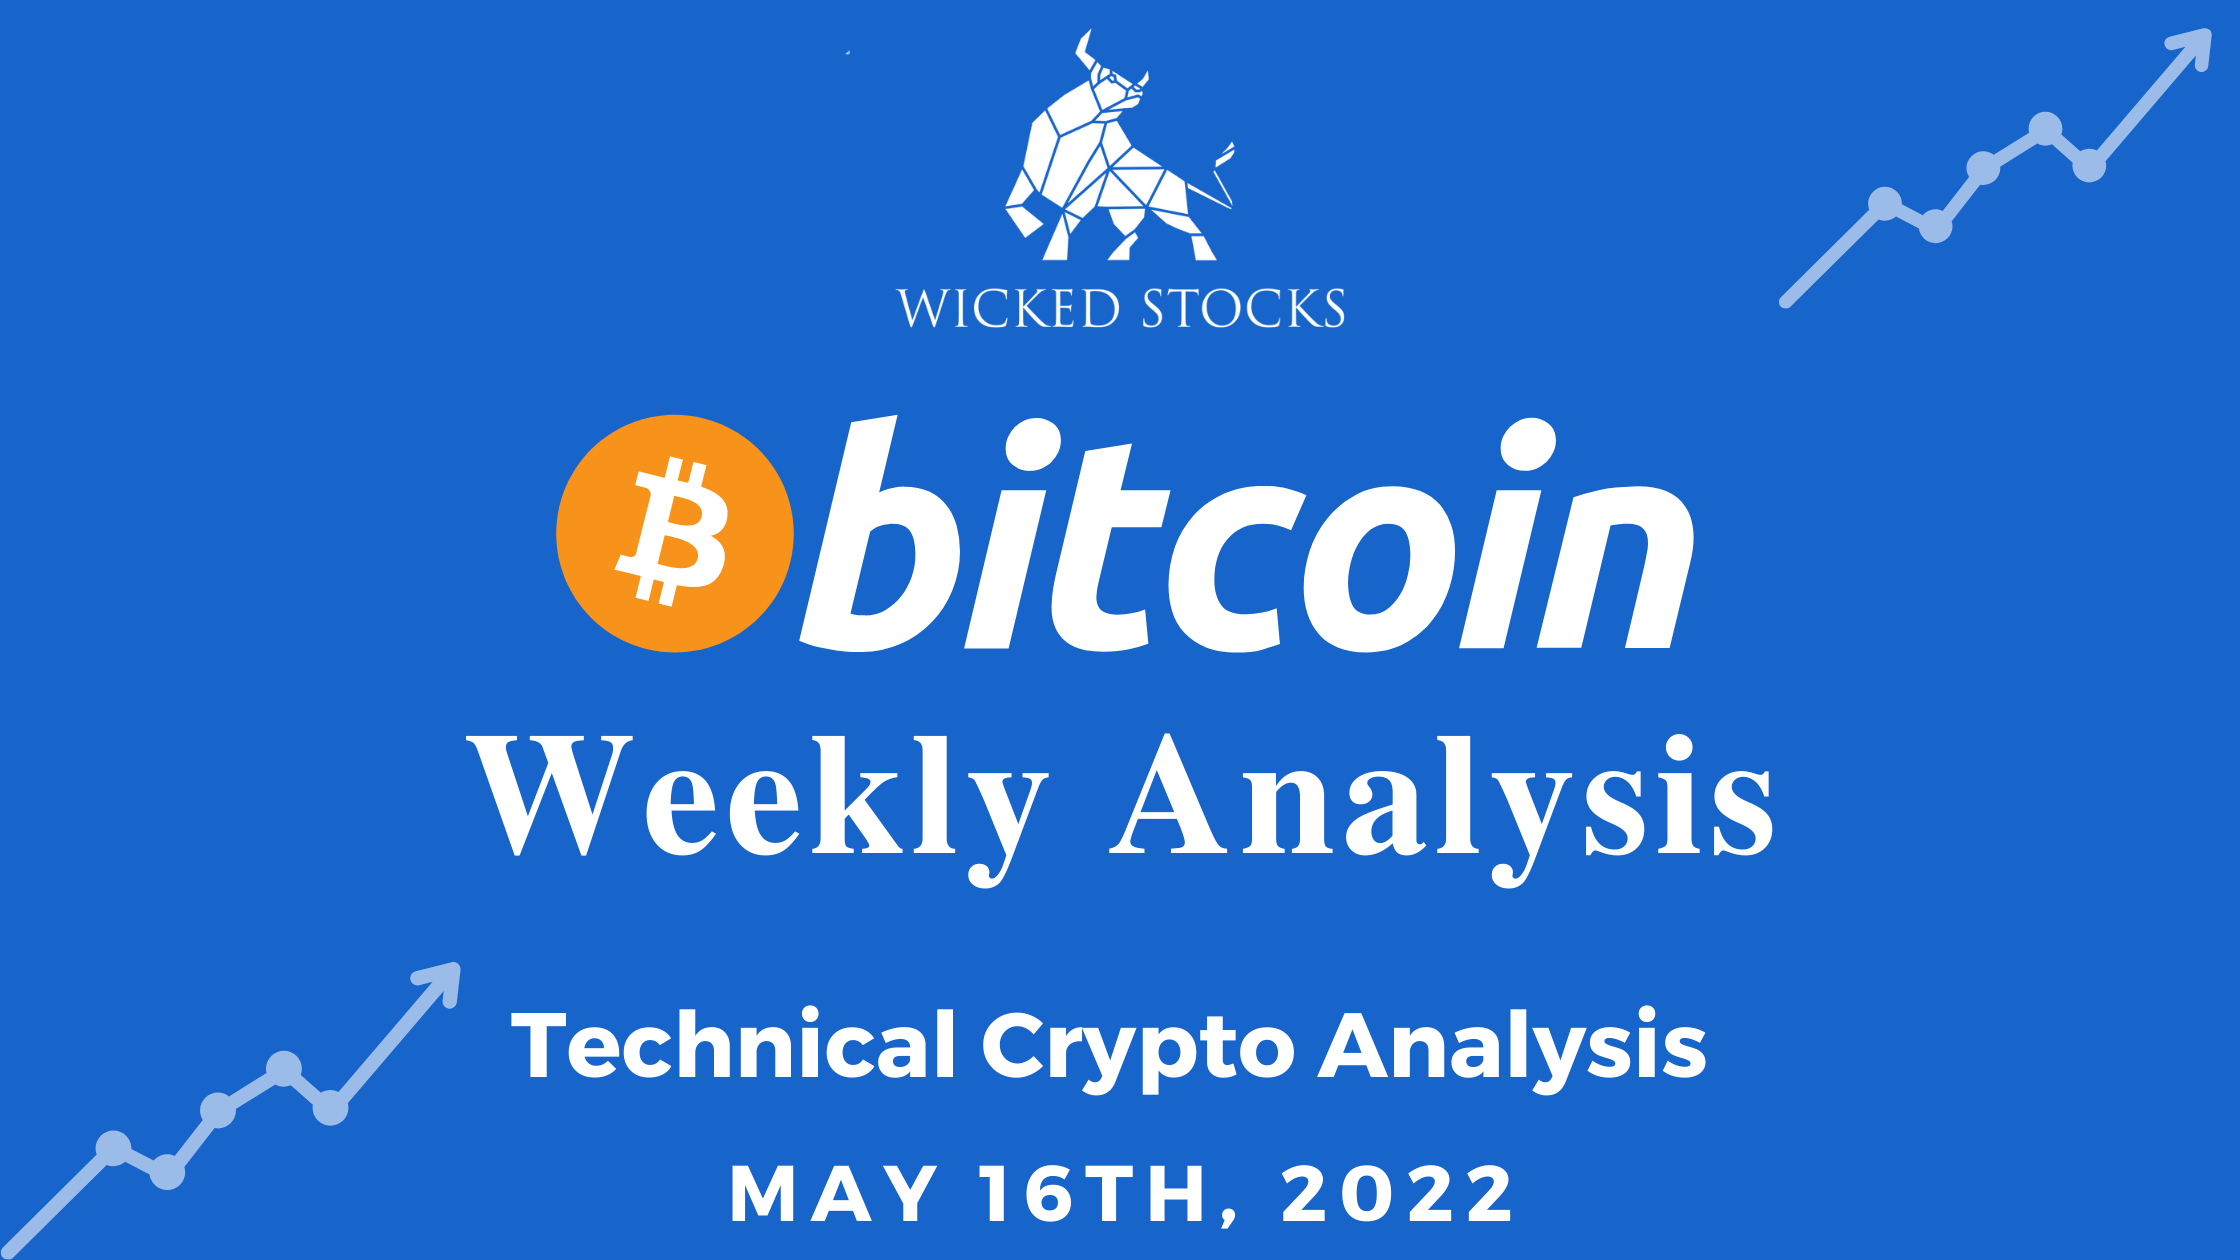 Bitcoin (BTC) Weekly Analysis 5/16/22